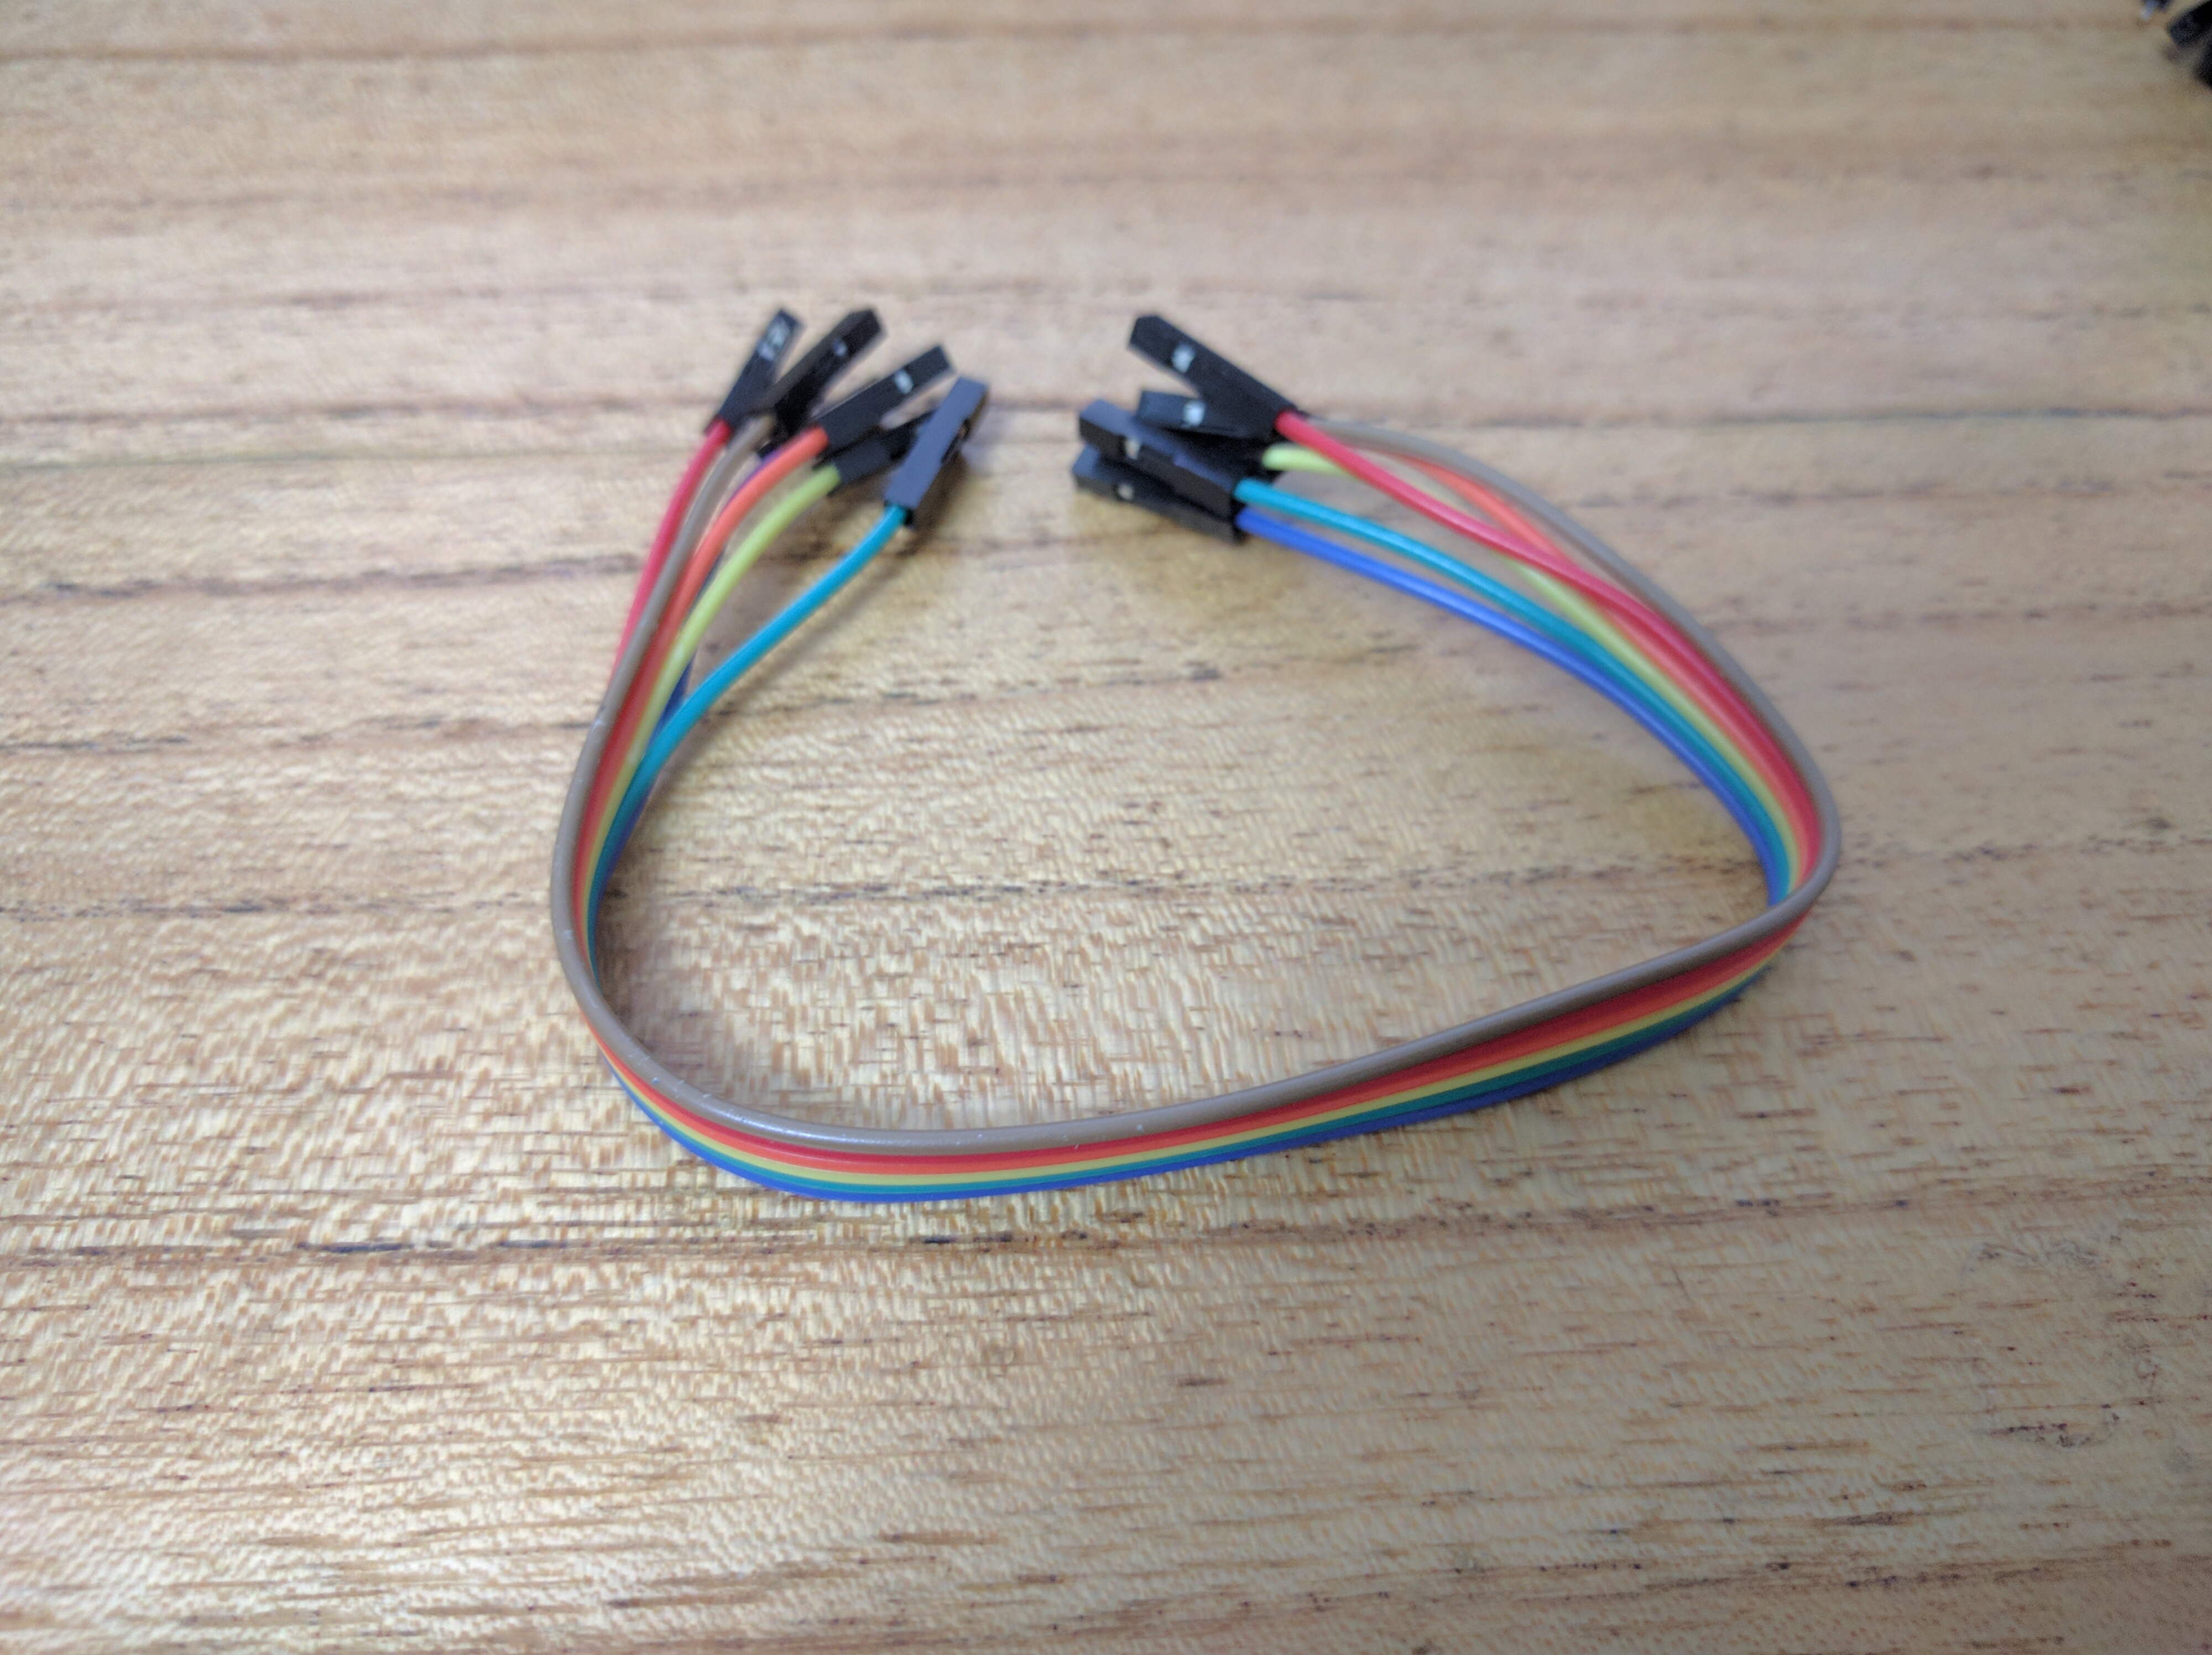 F-F Jumper wires